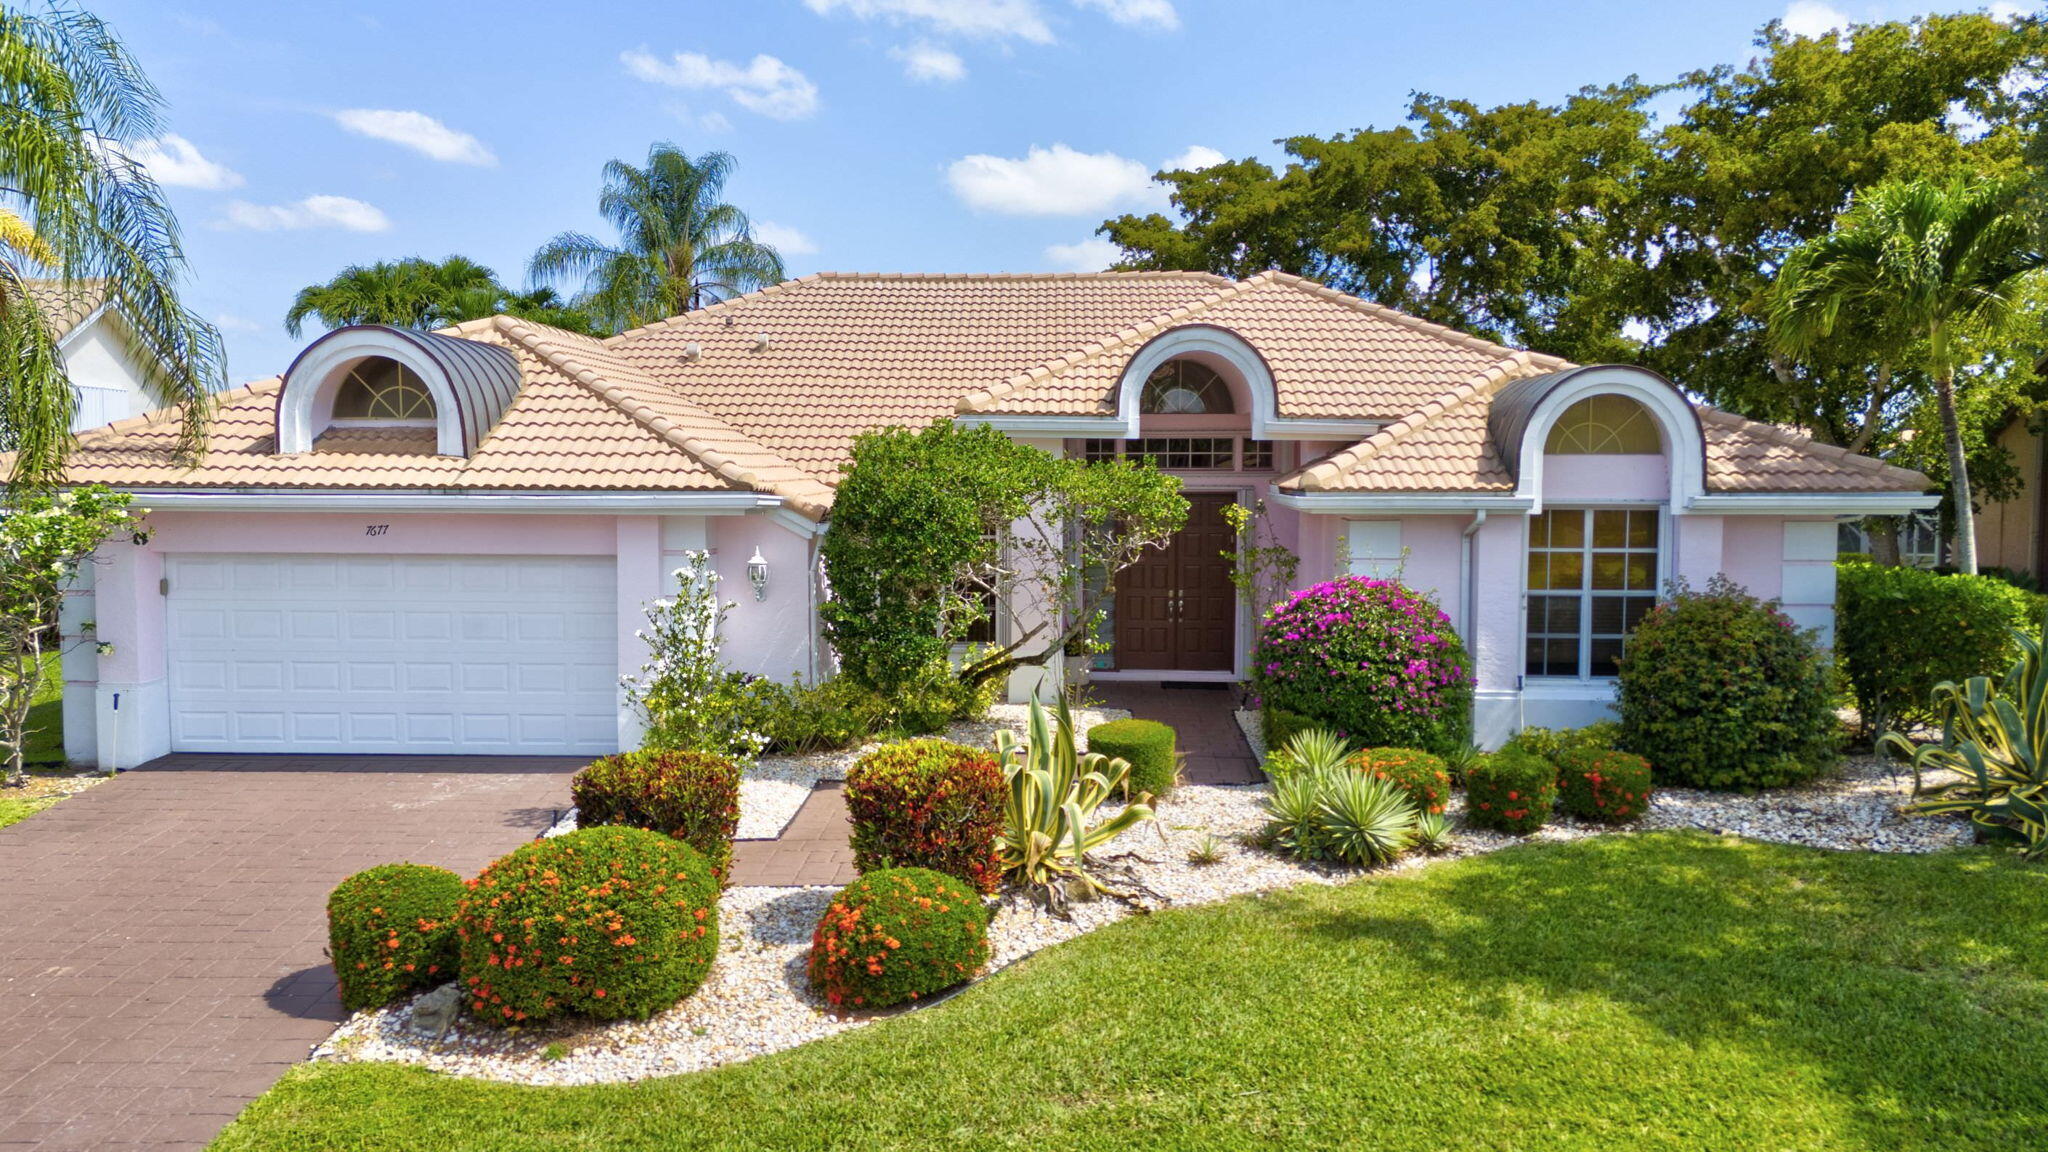 Property for Sale at 7677 Dorchester Road, Boynton Beach, Palm Beach County, Florida - Bedrooms: 3 
Bathrooms: 3  - $525,000